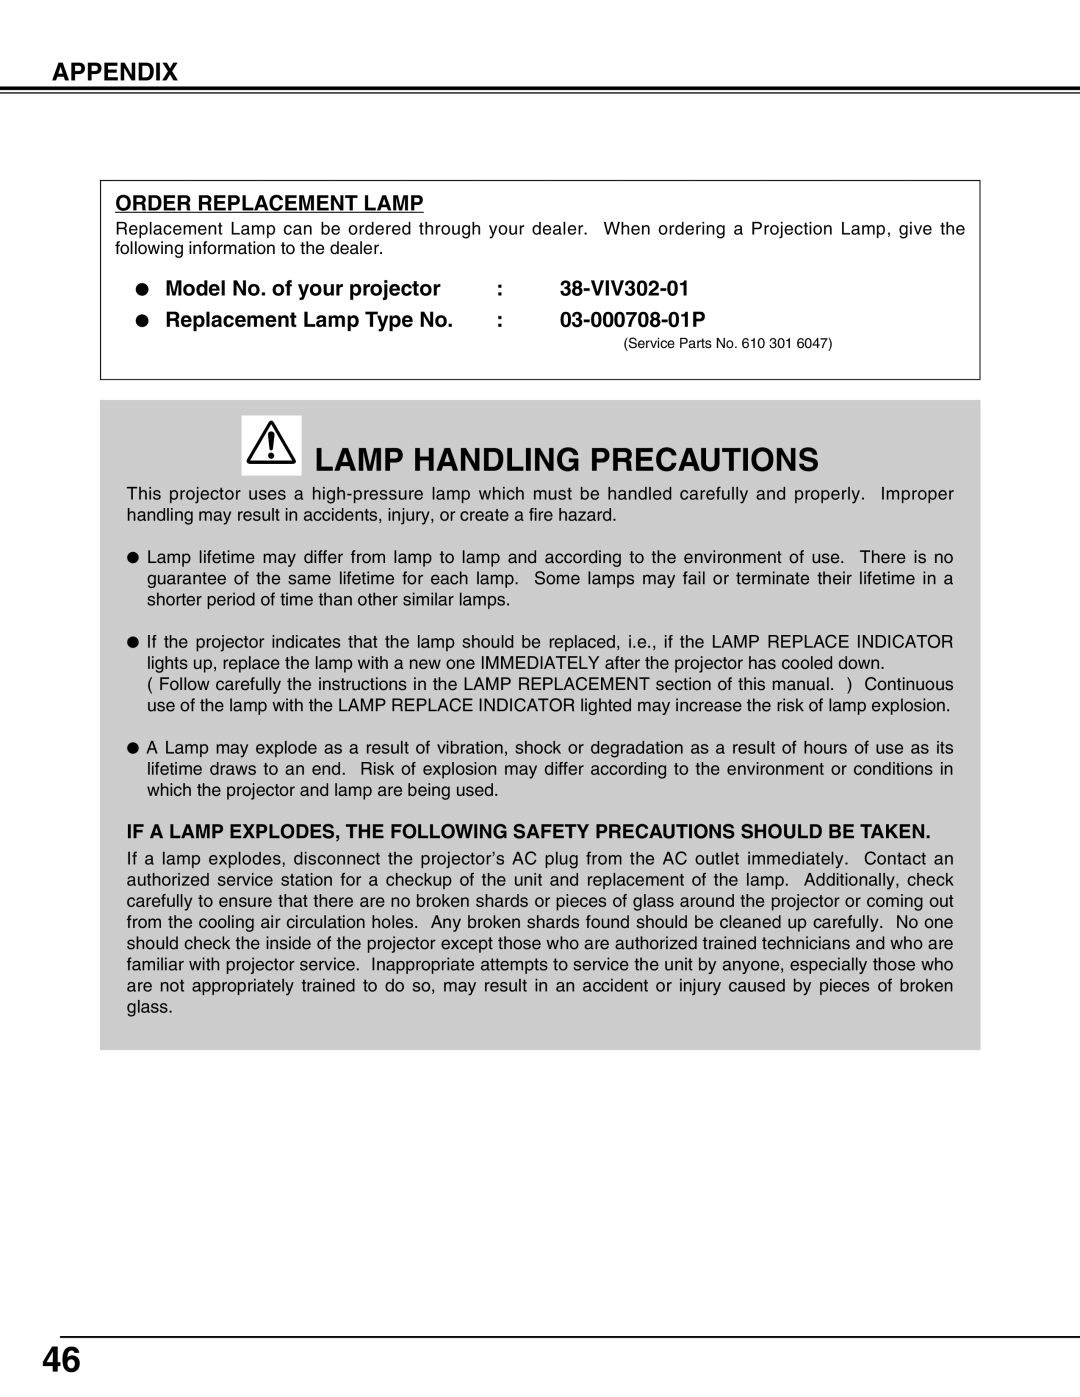 Christie Digital Systems 38-VIV302-01 Lamp Handling Precautions, Appendix, Order Replacement Lamp, 03-000708-01P 